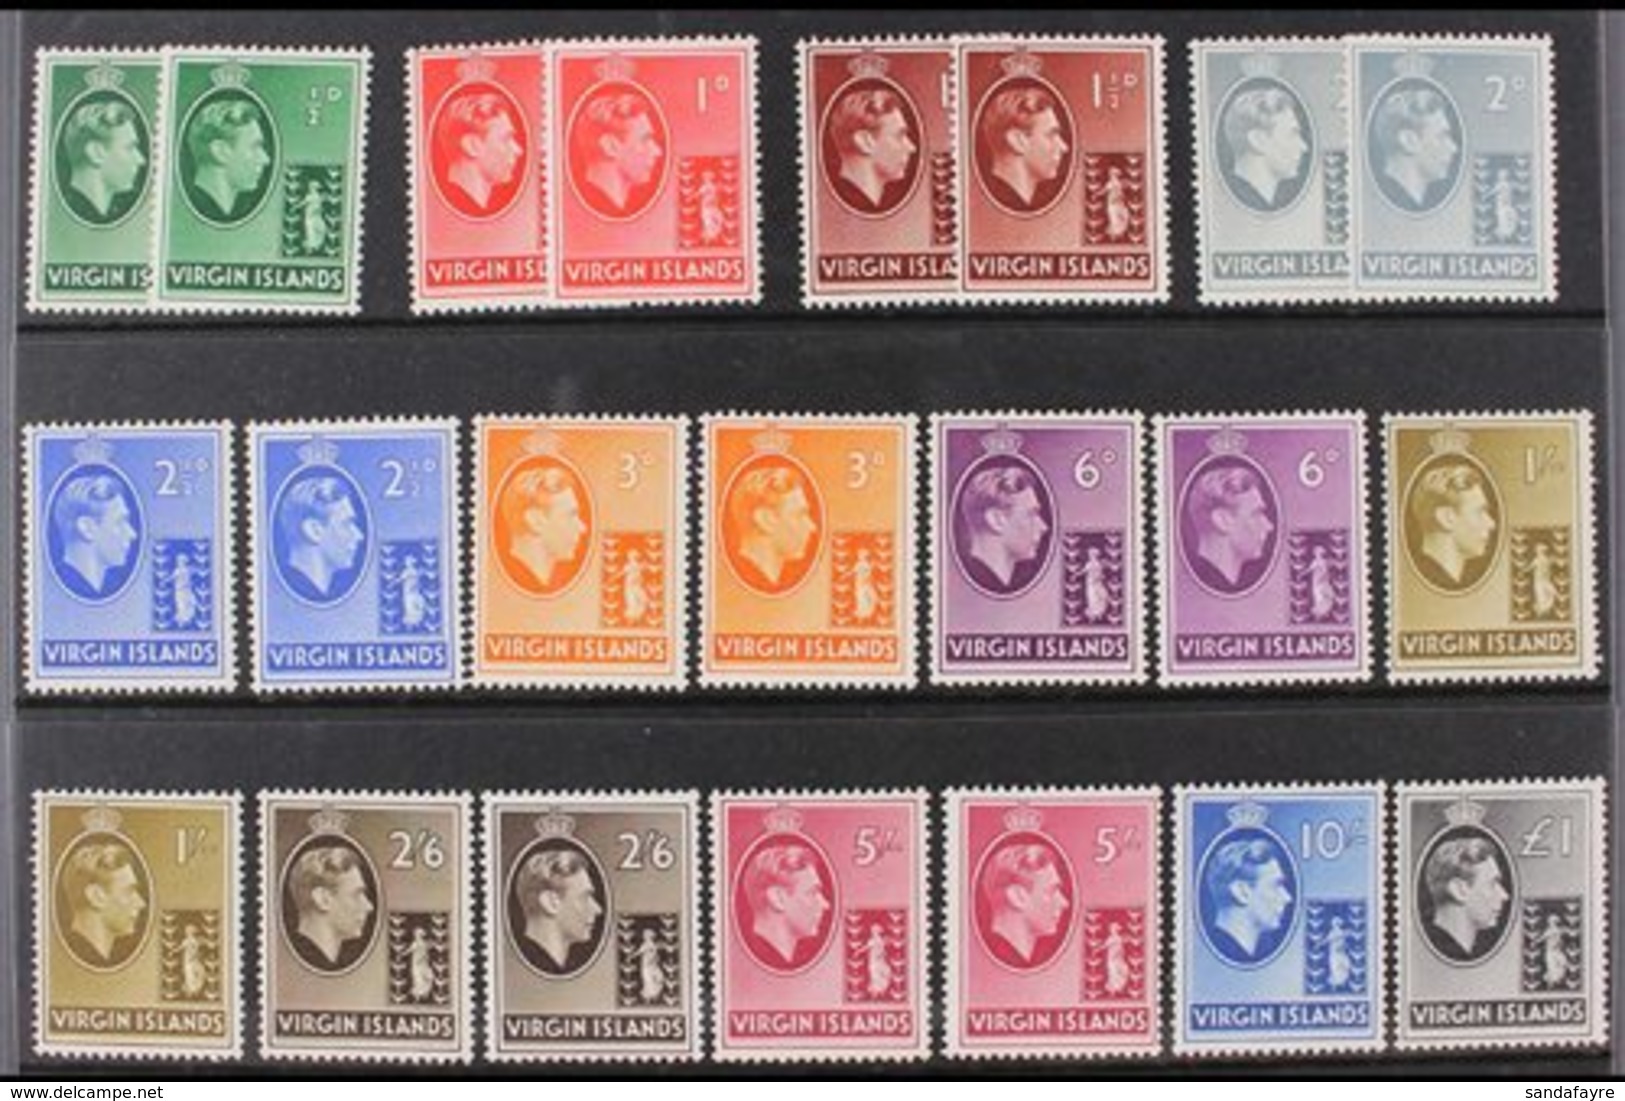 1938-47  KGVI Definitives Complete Set Including All SG Listed Paper Variants, SG 110/21, Very Fine NEVER HINGED MINT. L - British Virgin Islands